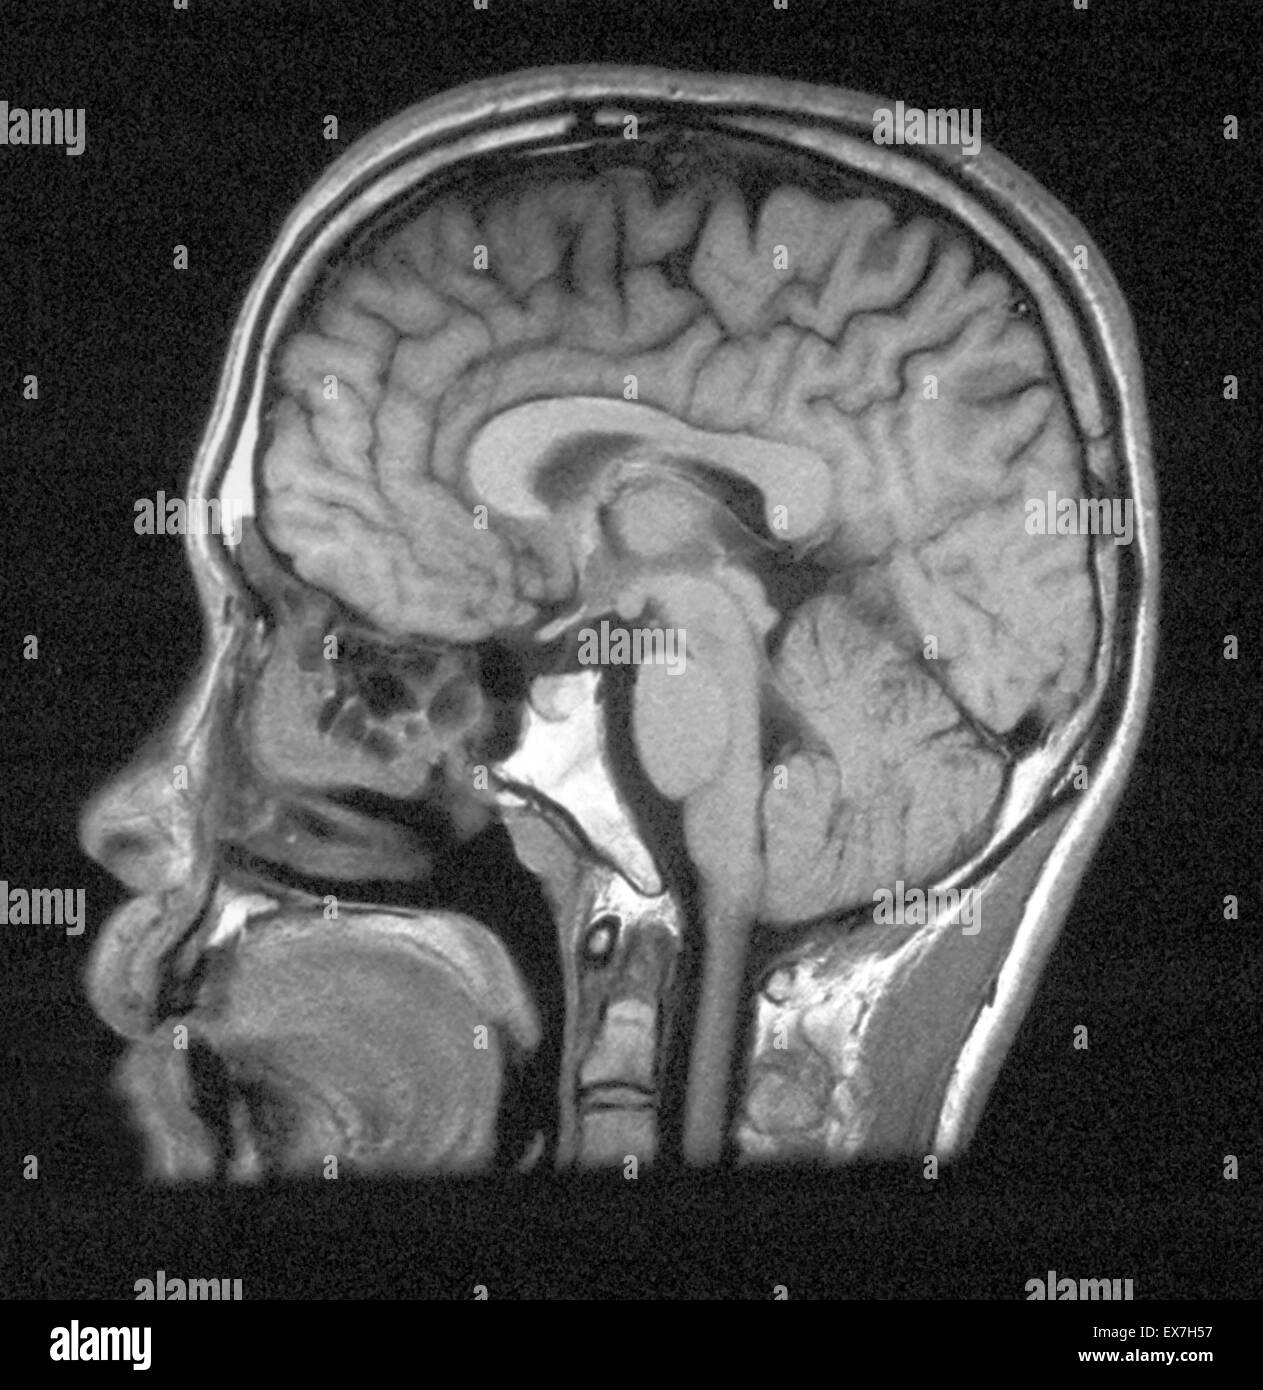 MRI des Kopfes zeigt normale Hirnstrukturen. Stockfoto